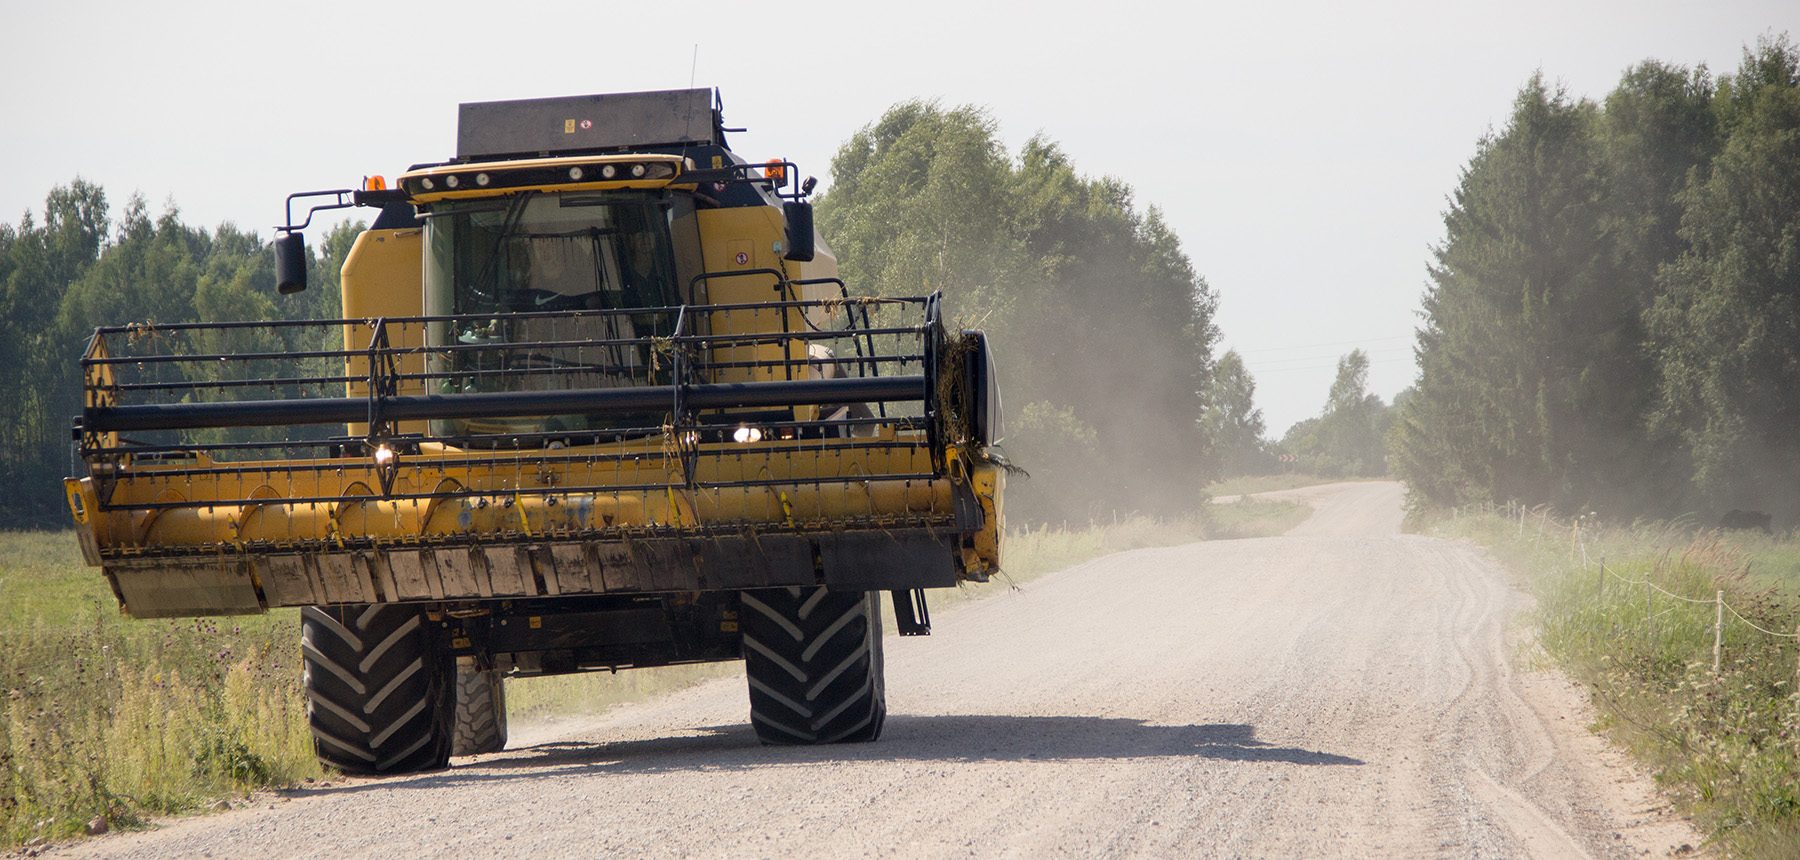 Large farm equipment traveling down a narrow gravel road.